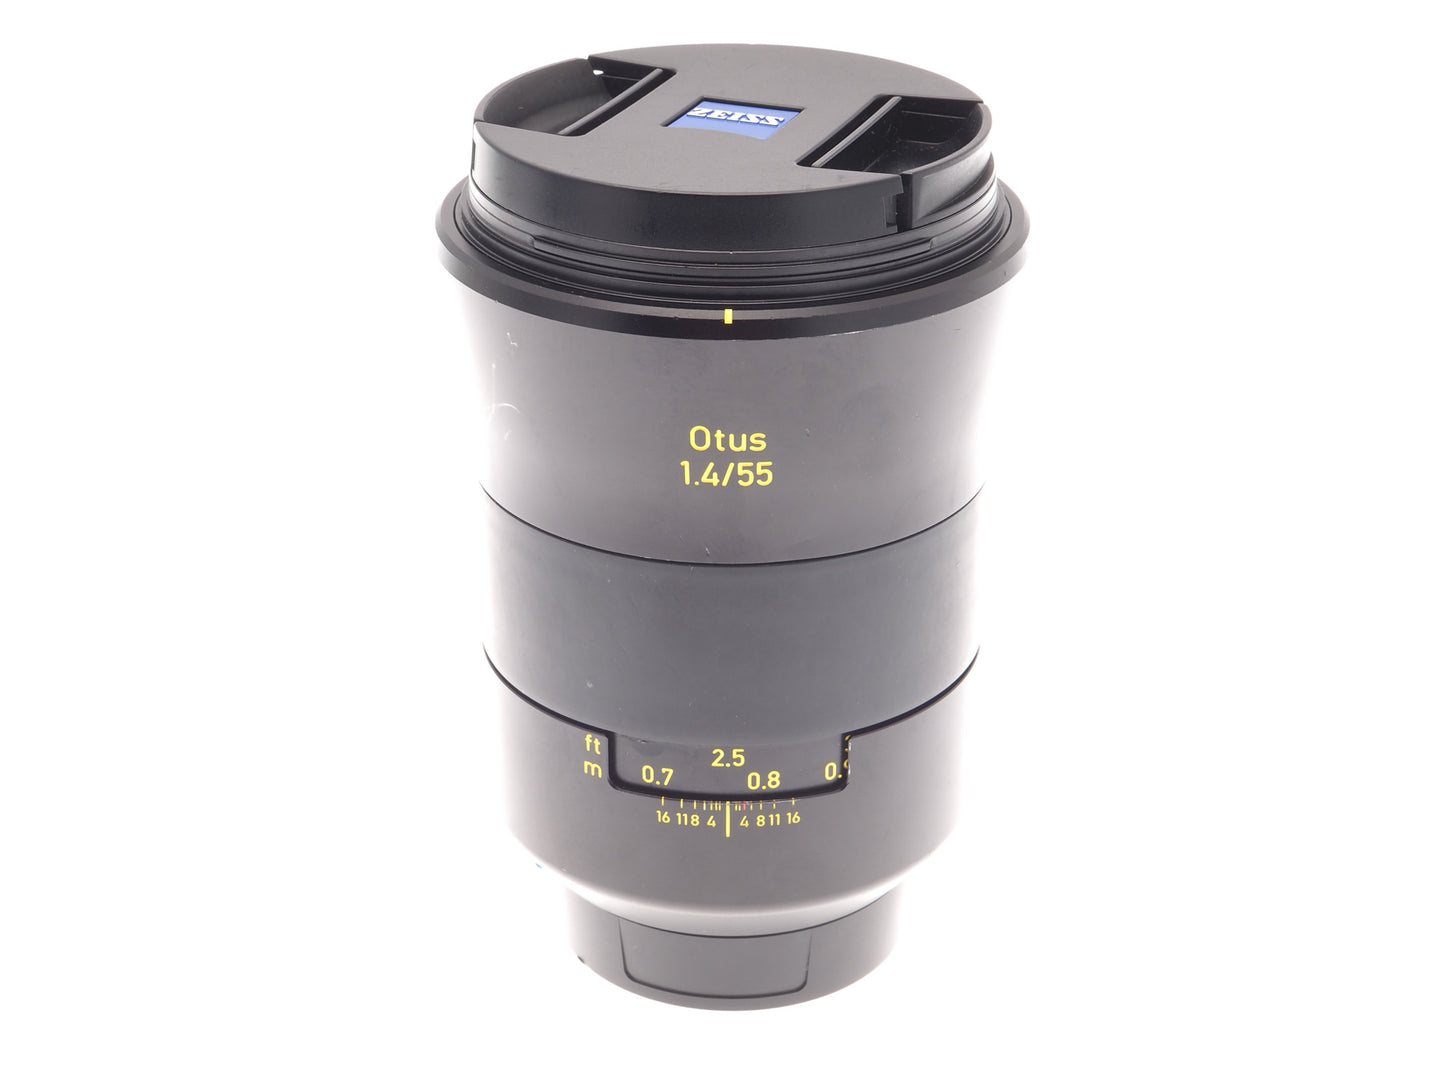 Carl Zeiss 55mm f1.4 Otus APO Distagon T* ZE - Lens